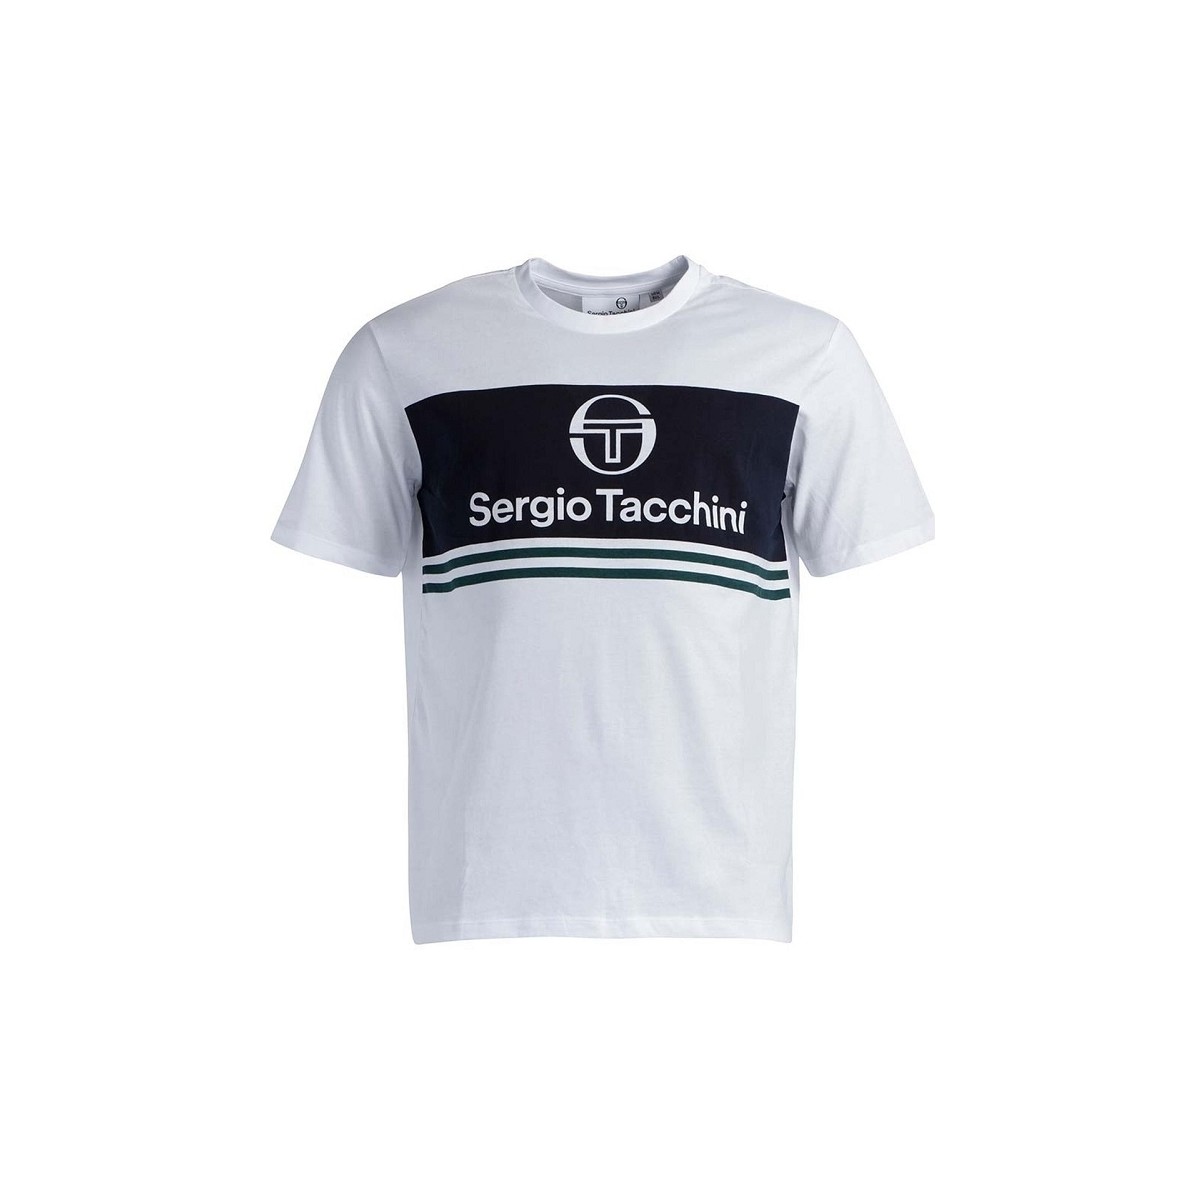 tekstylia Męskie T-shirty i Koszulki polo Sergio Tacchini ATHA TEE Biały